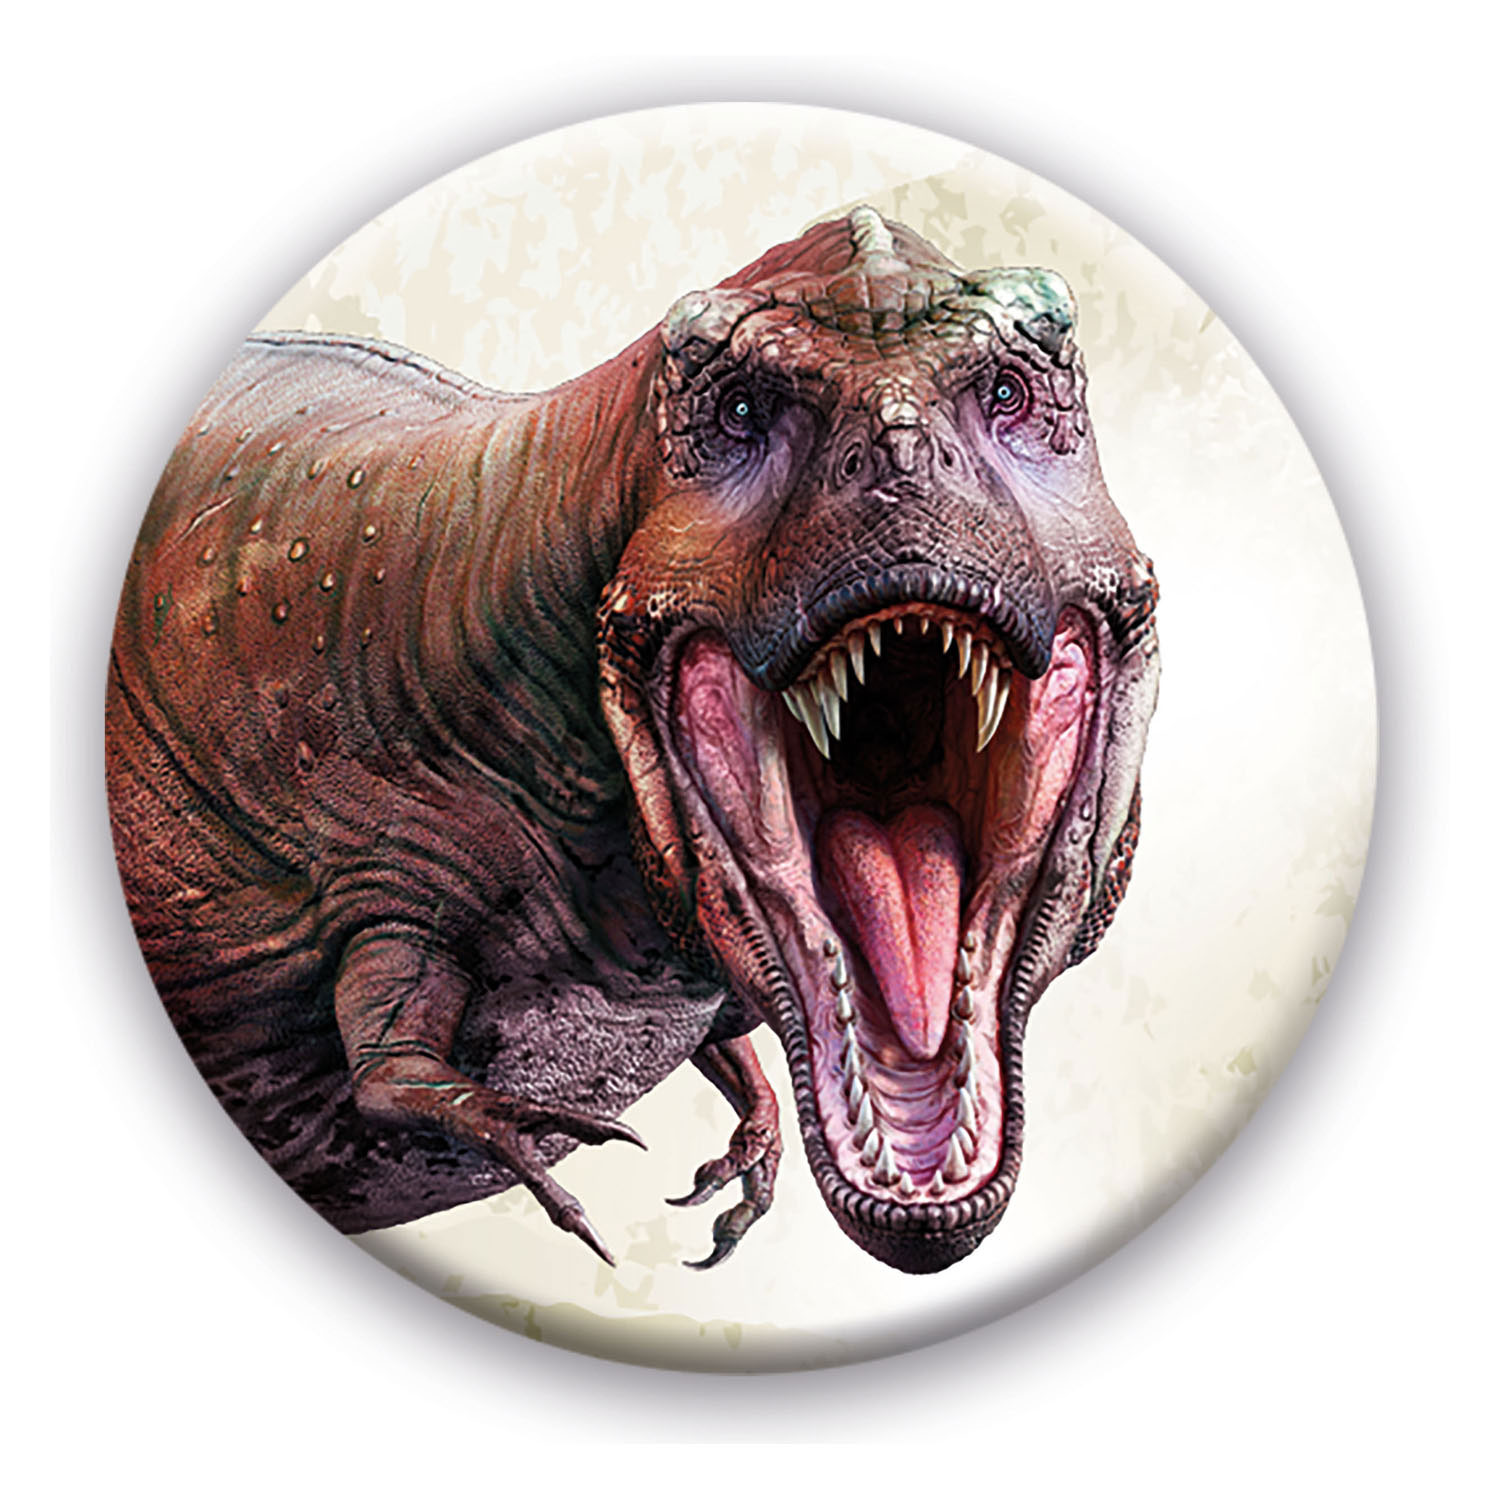 Clementoni Dinosauriers en de Prehistorie Bordspel (NL)